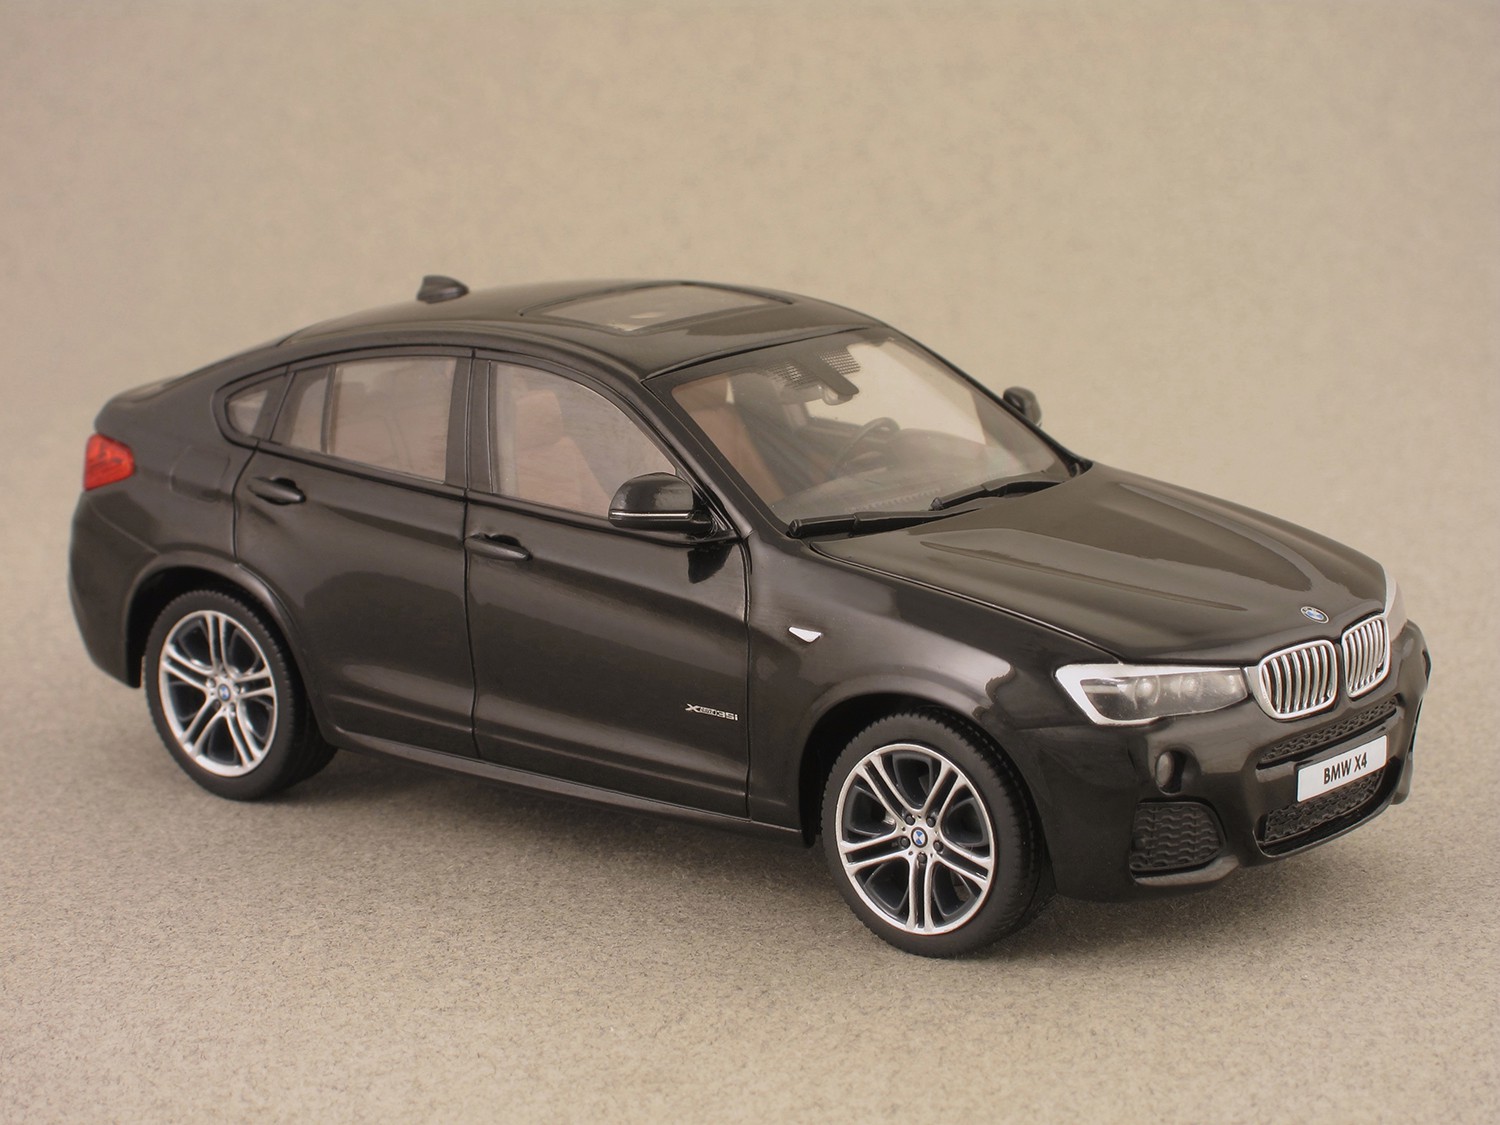 BMW X4 black (Herpa) 1:43 - Minicarweb